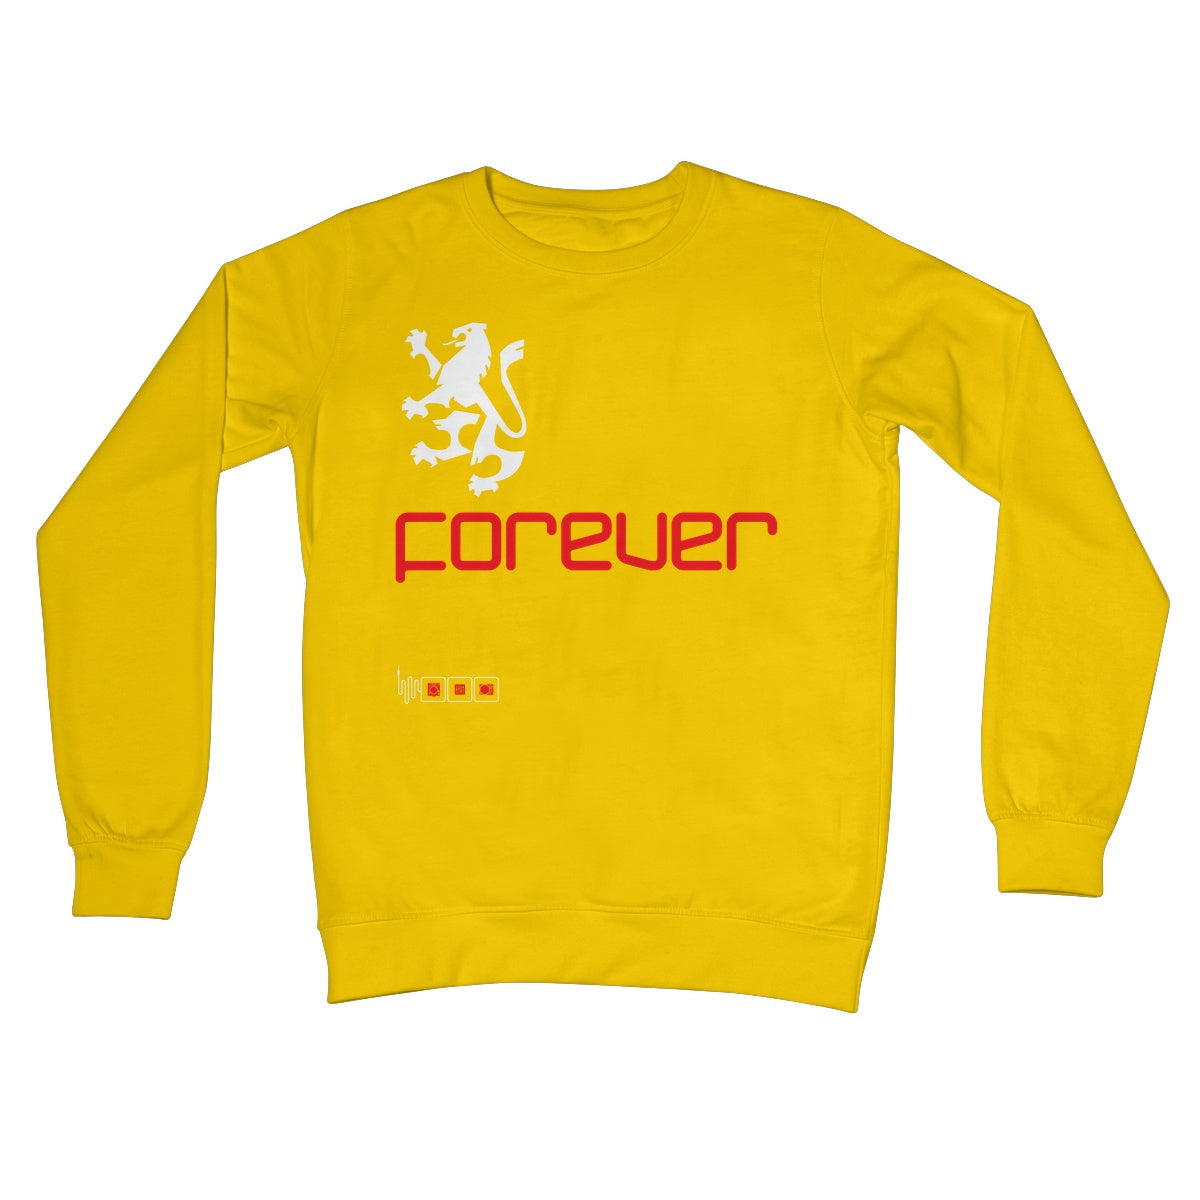 Gatecrasher Forever Sweatshirt